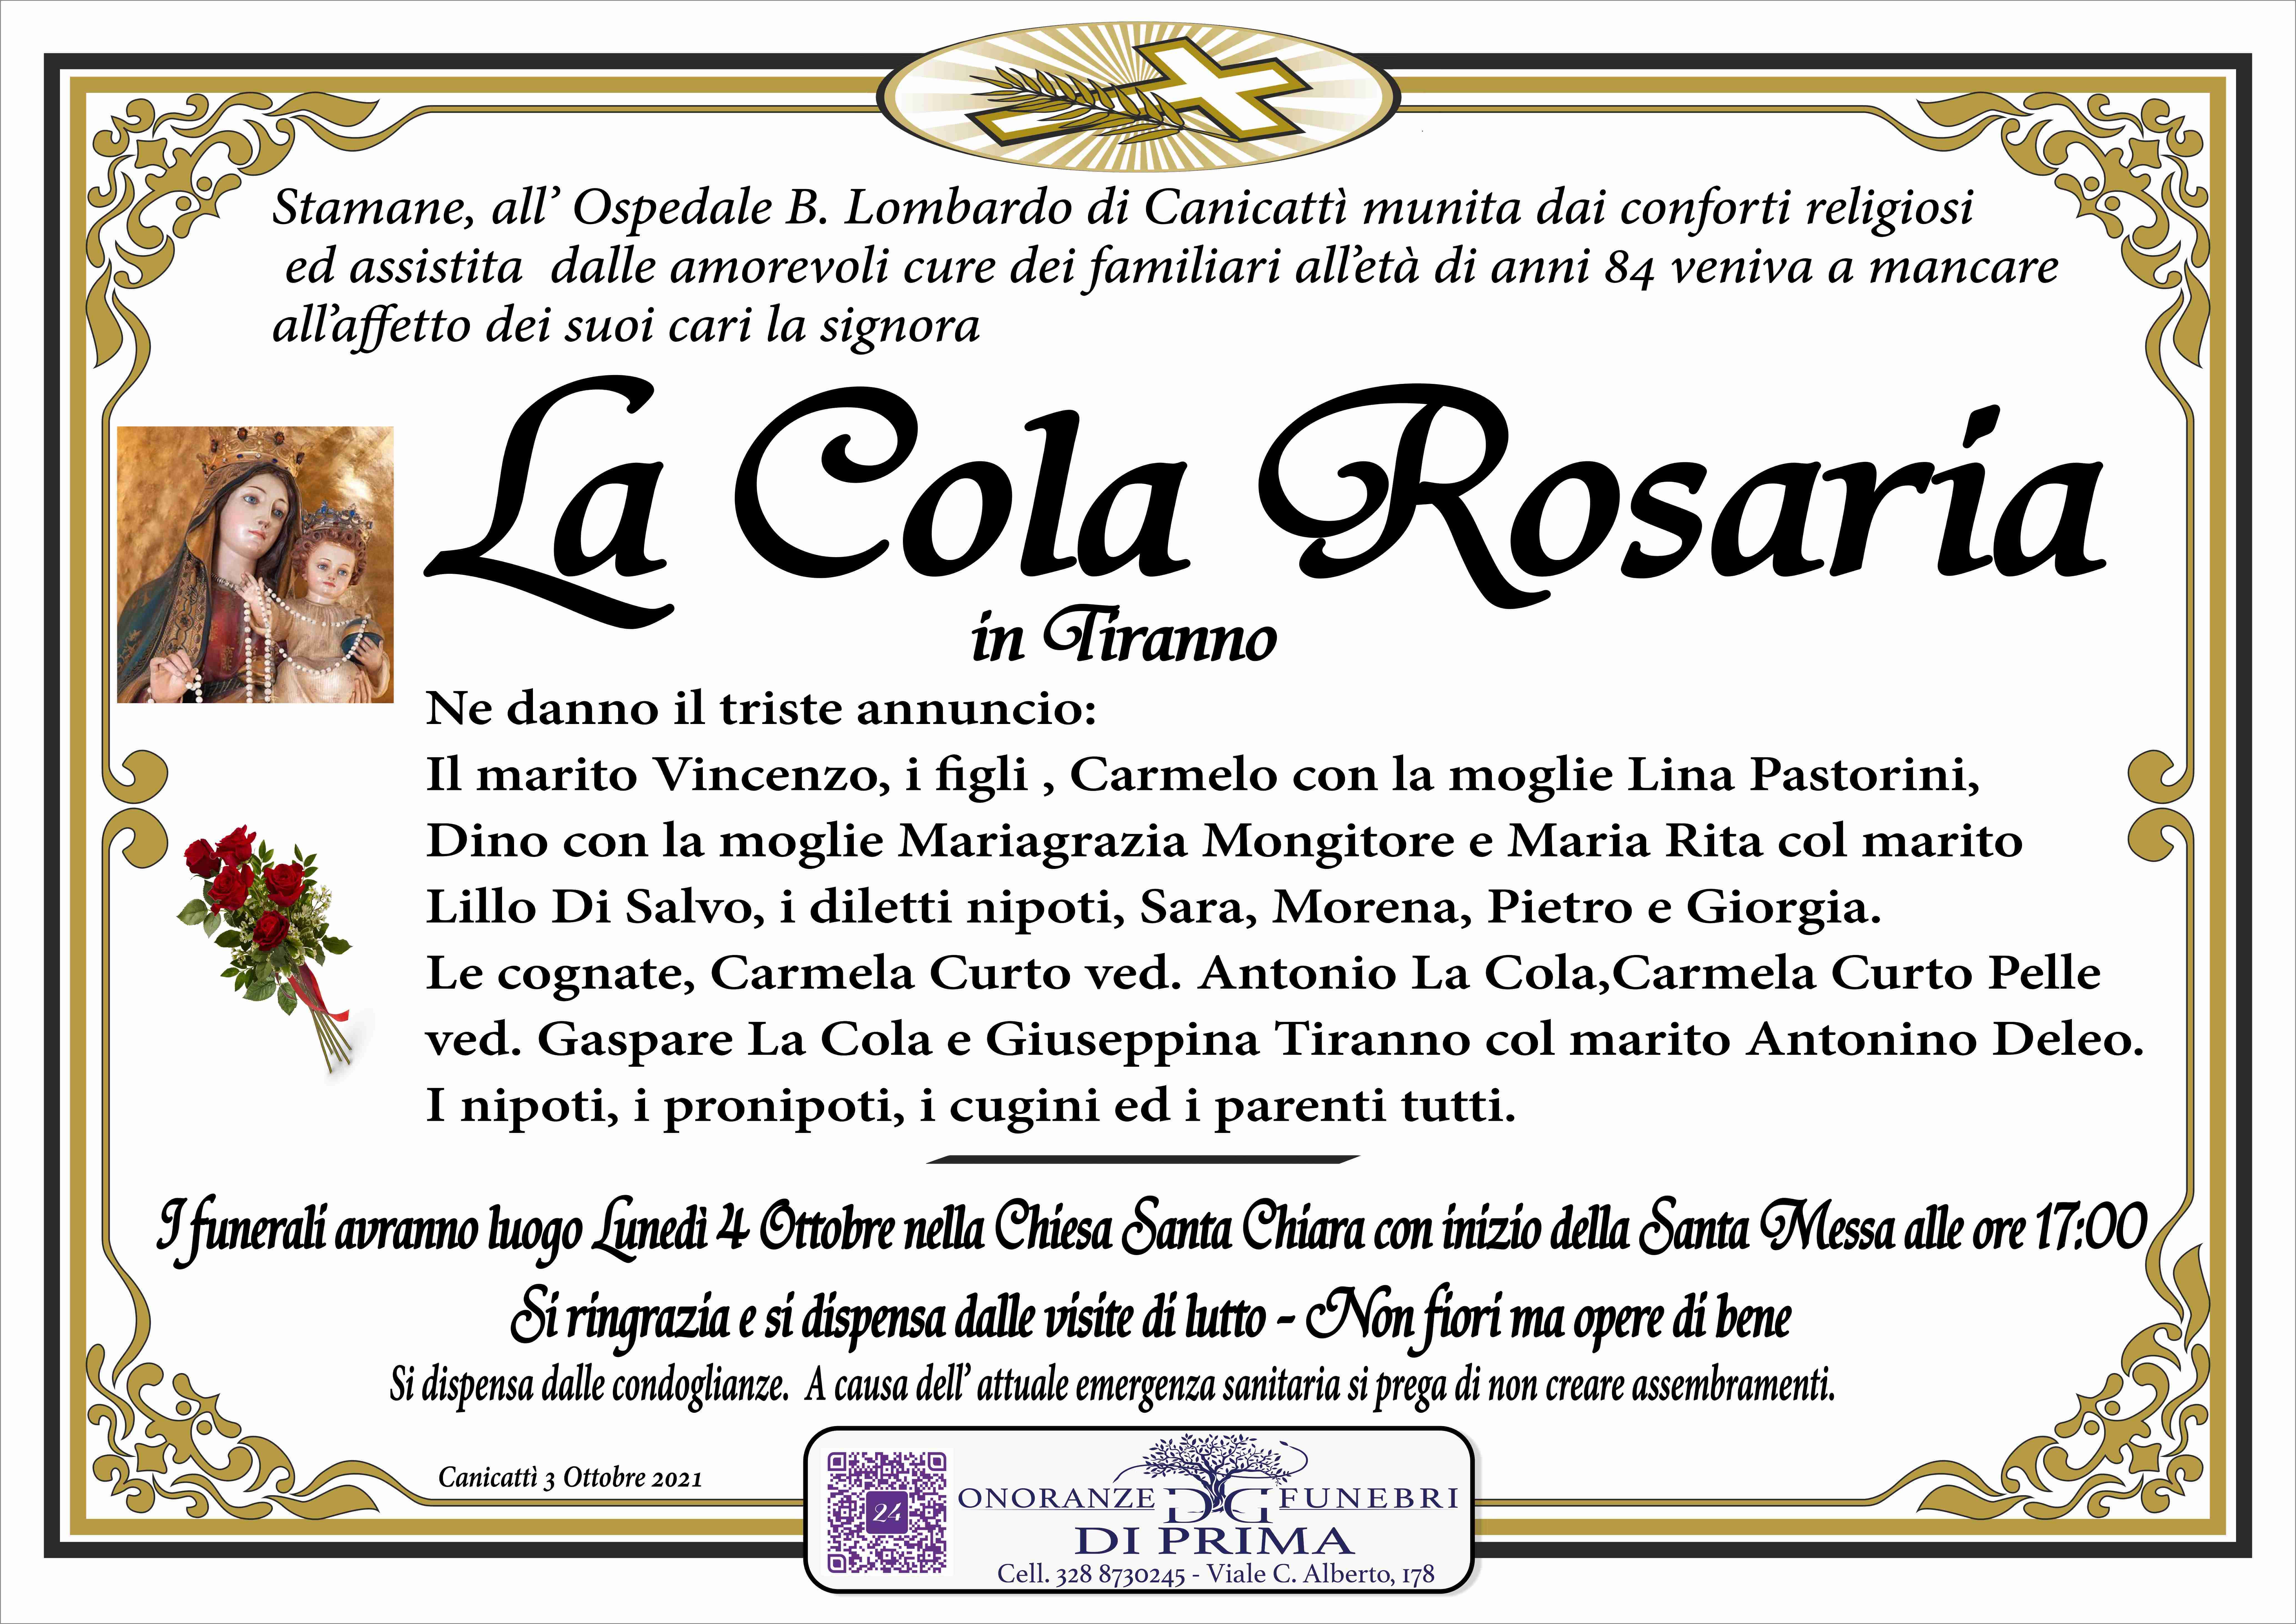 Rosaria La Cola